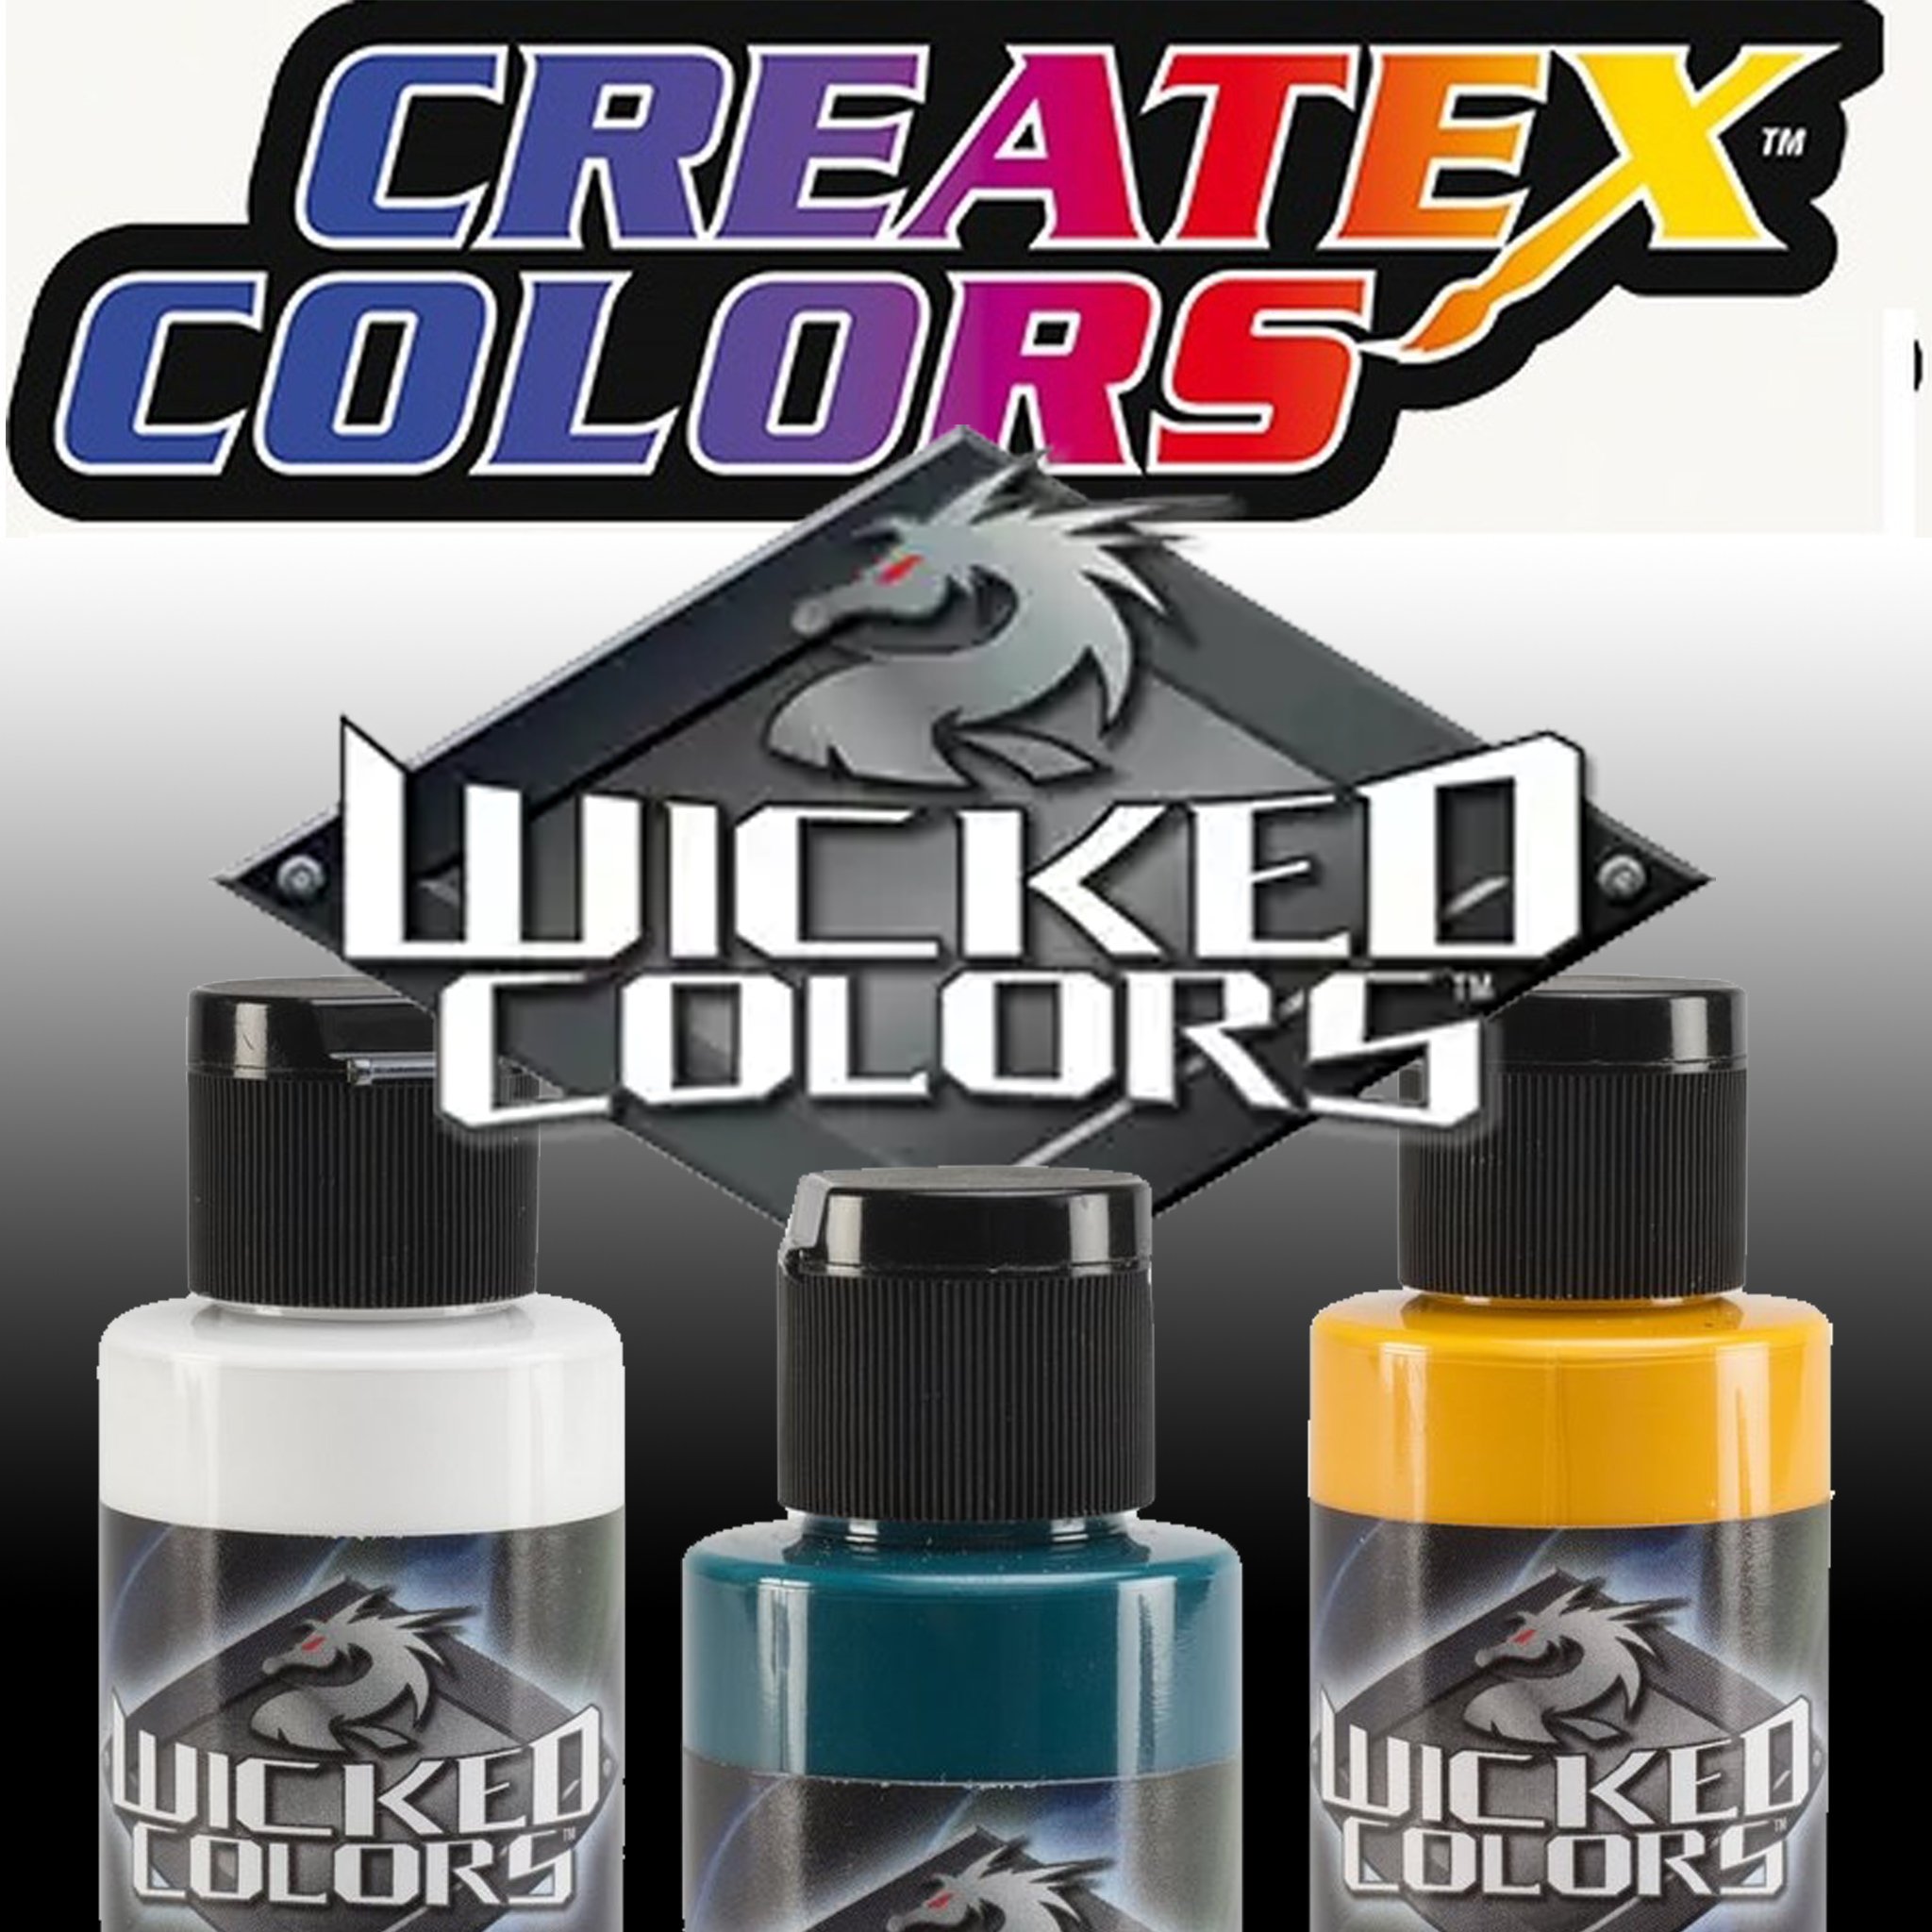 Createx Wicked Colors